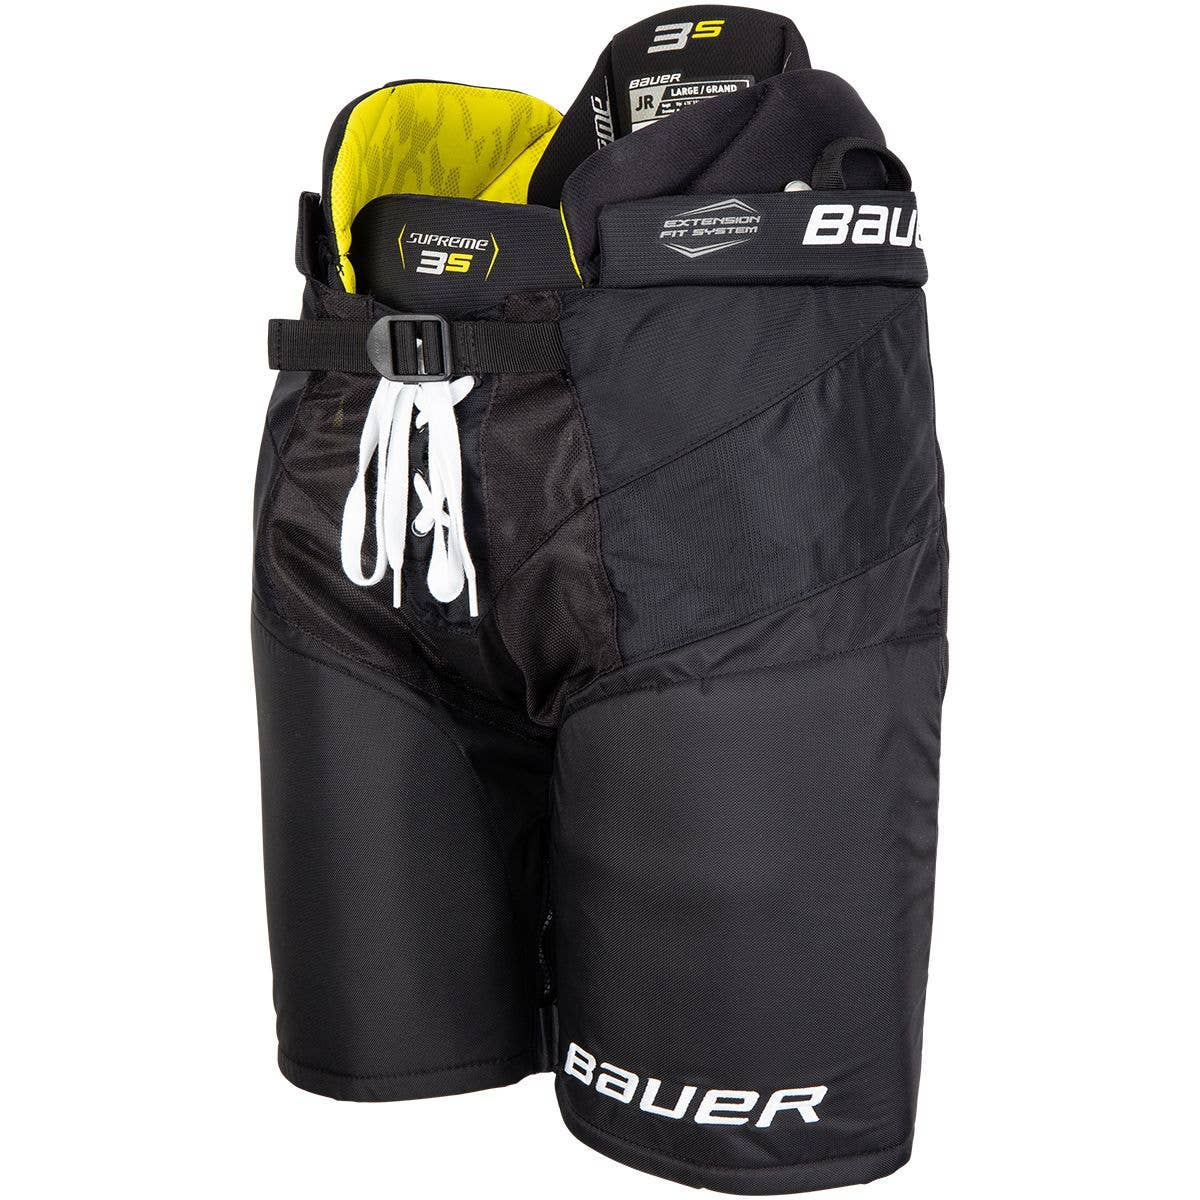 Bauer Supreme 3S Junior Ice Hockey Pants